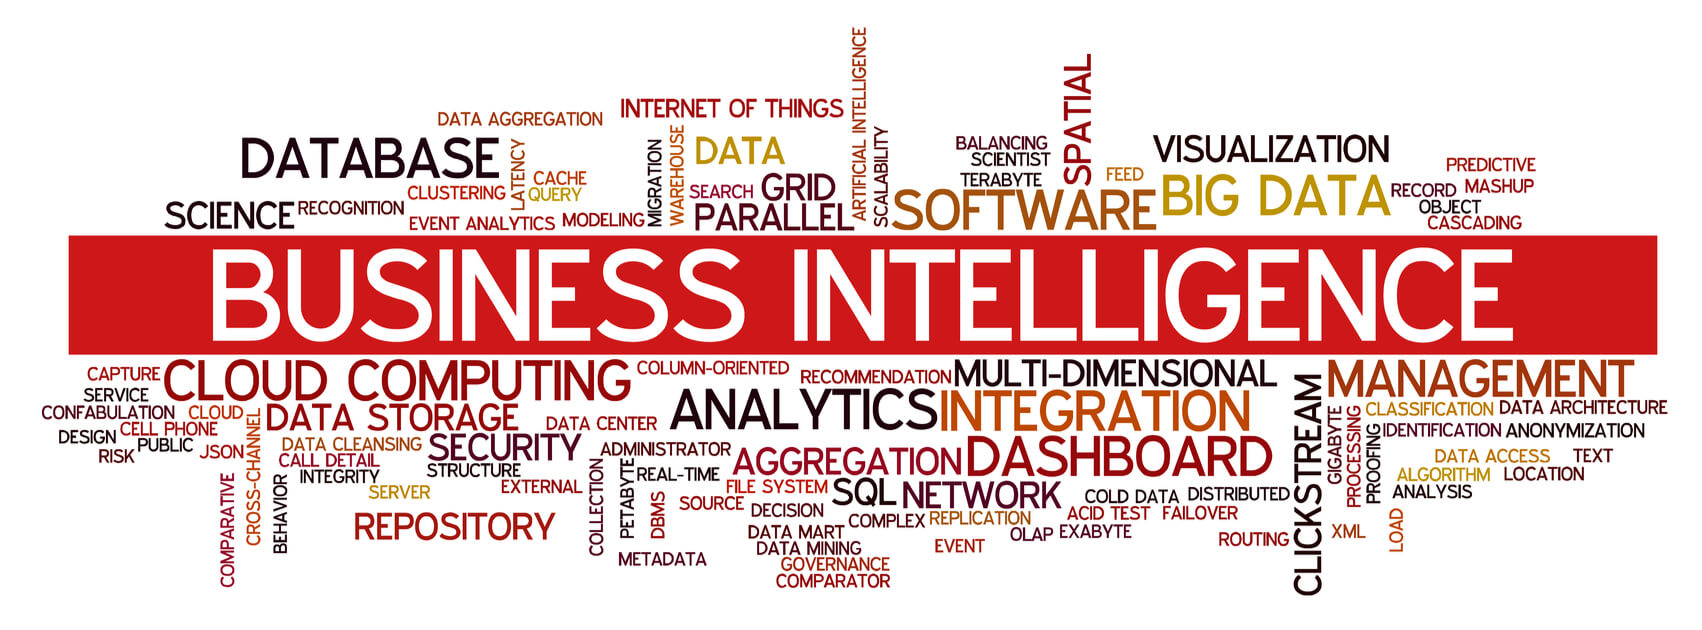 título business intelligence com diversos termos relacionados